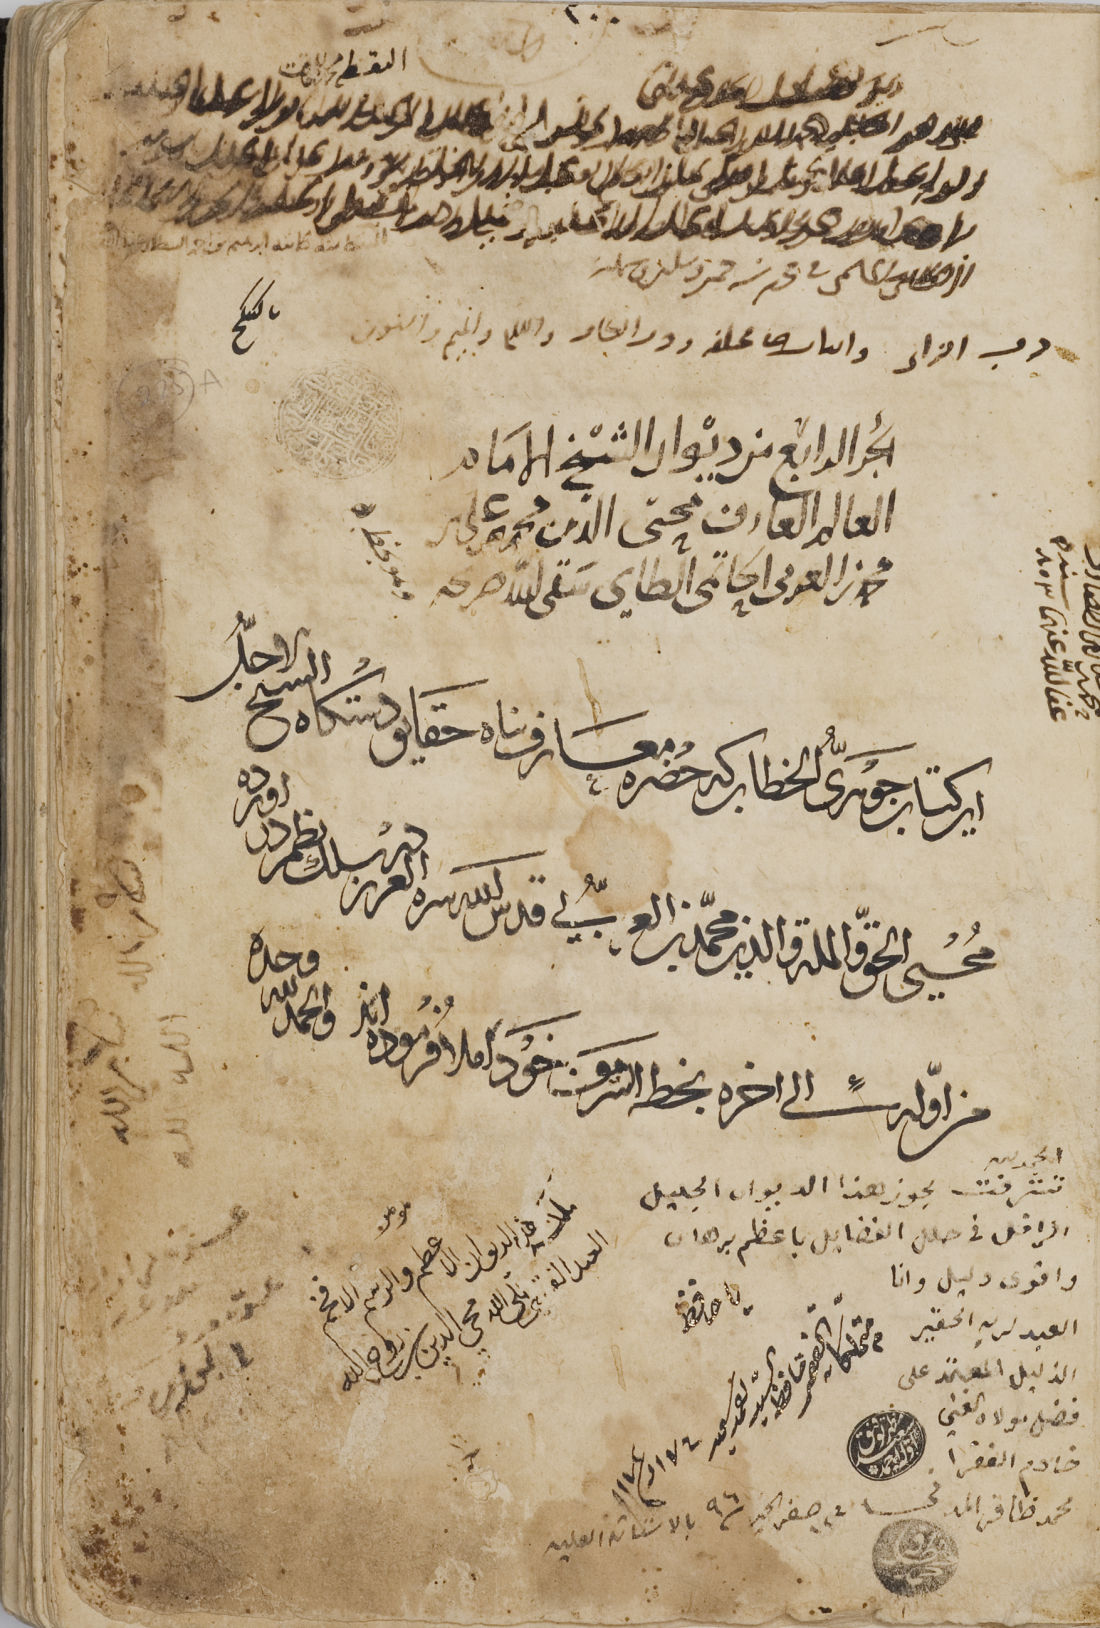 Ibn Al Arabi manuscript, ink on paper